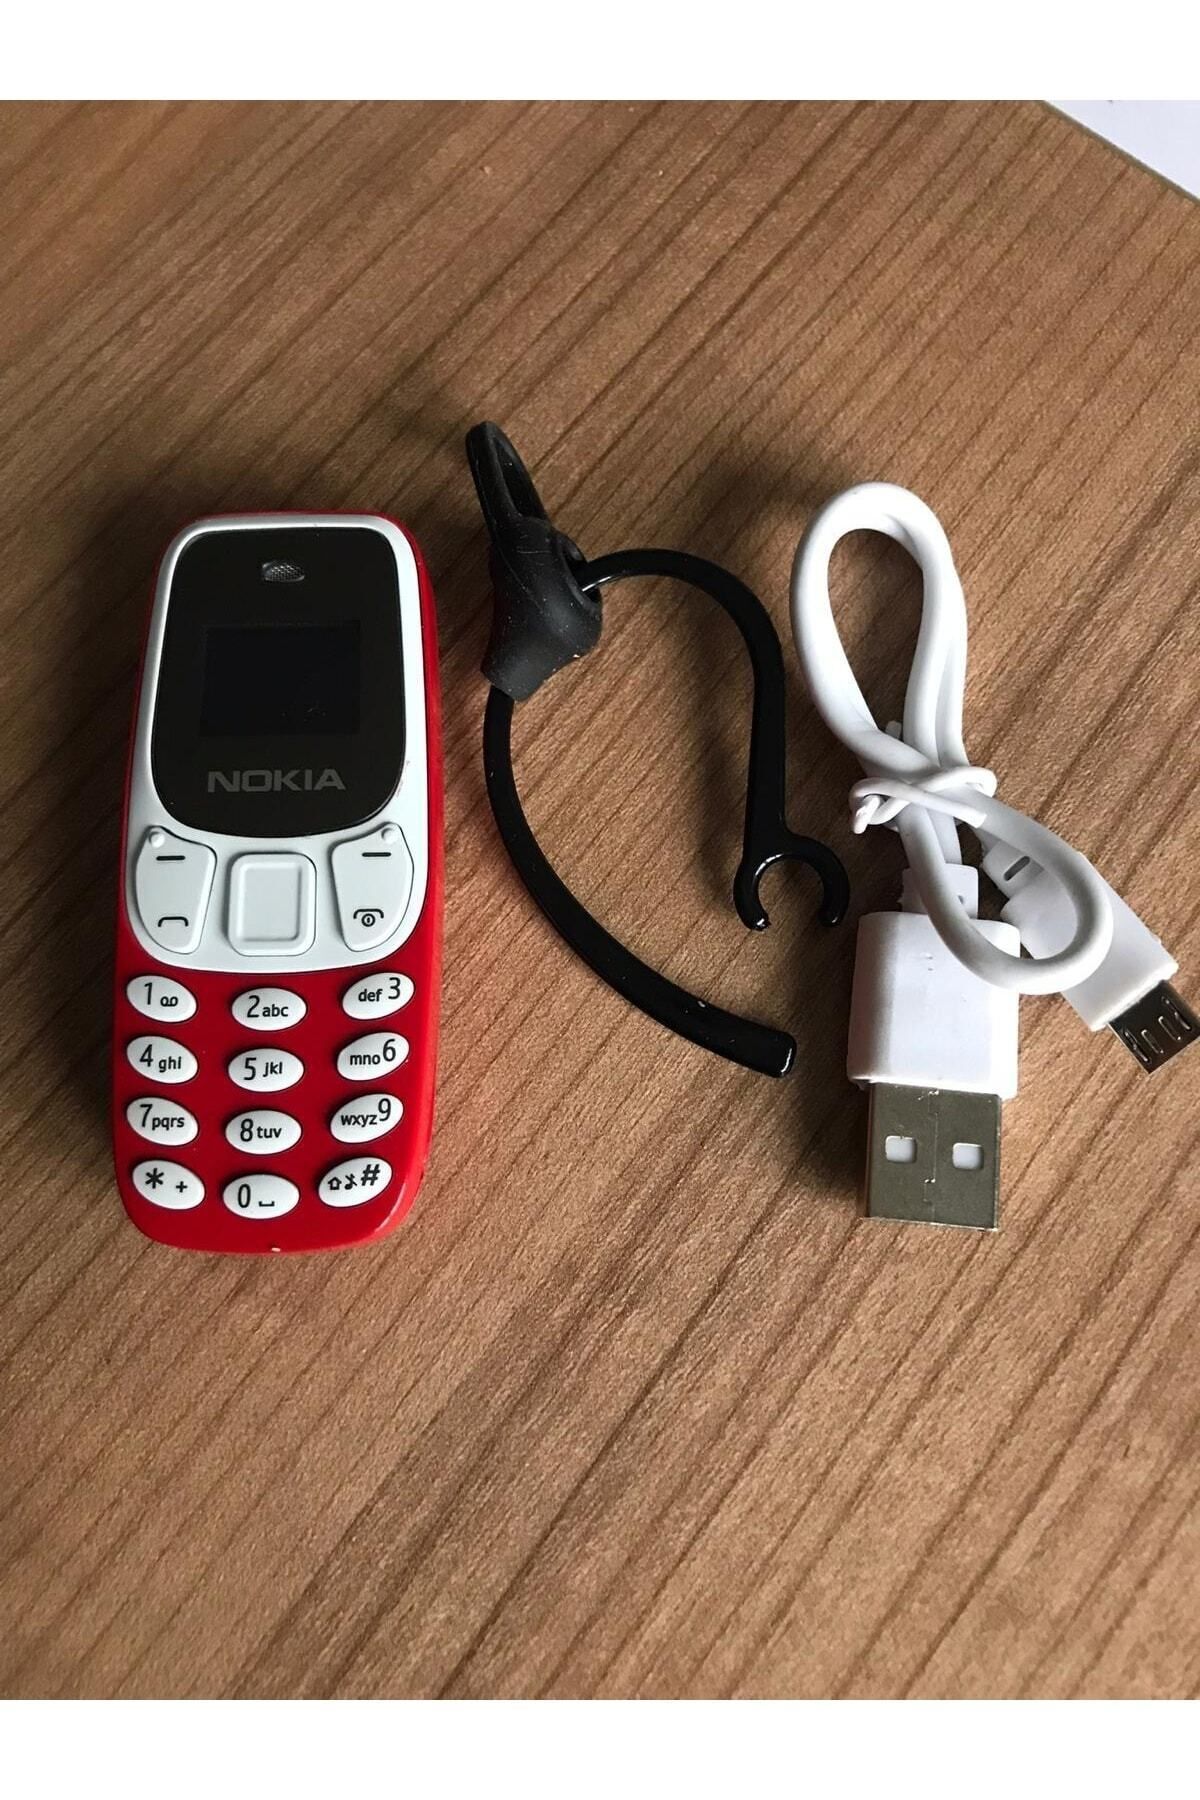 Nokia 3310 Parmak Telefon Hediyelidir